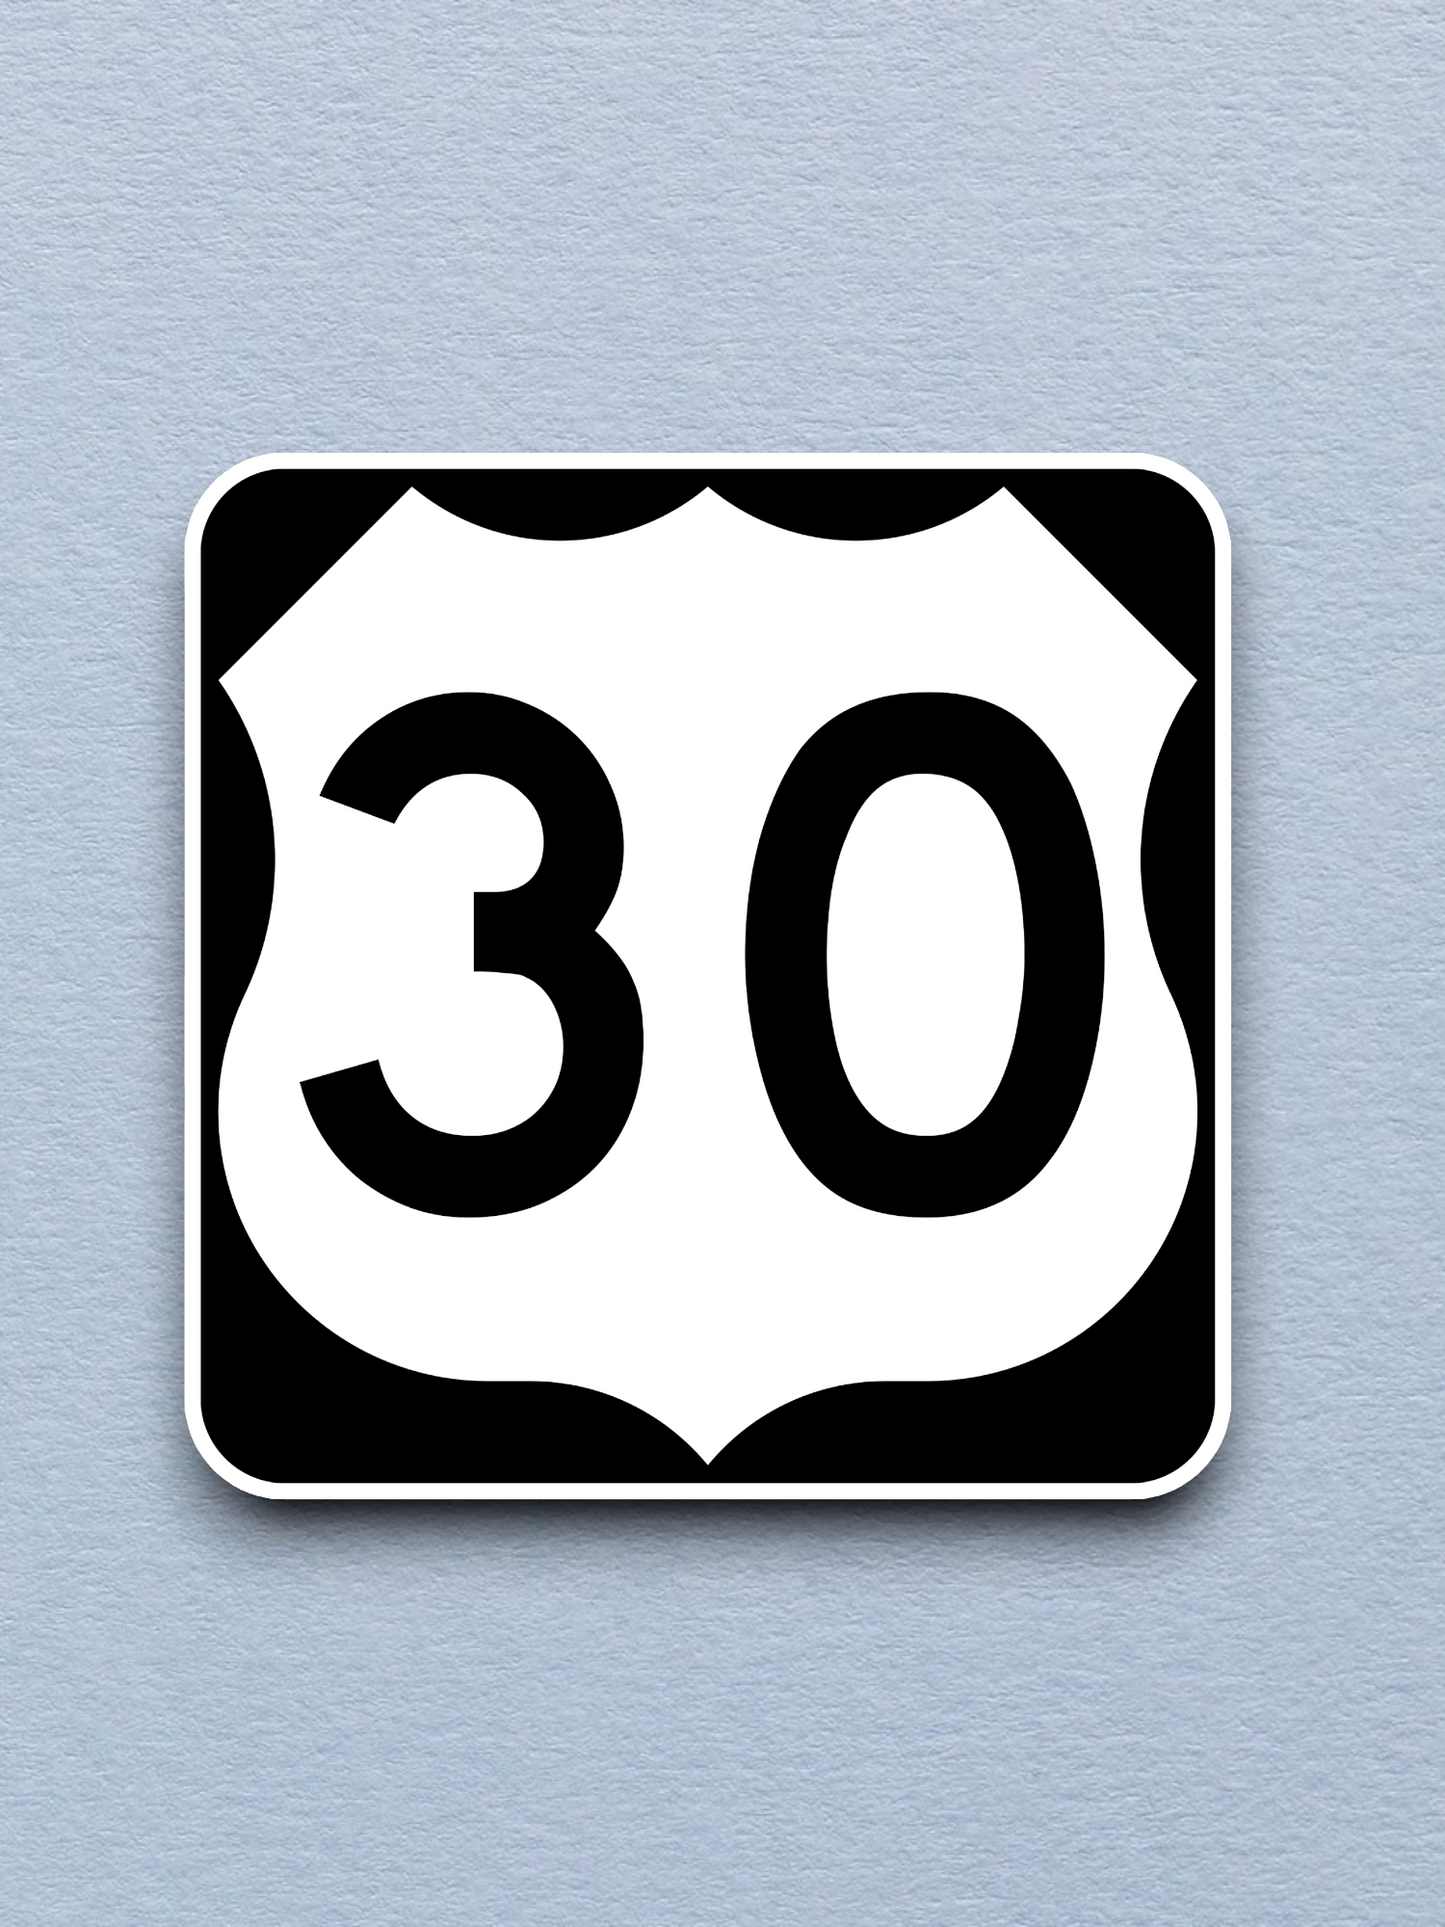 U.S. Route 30 Road Sign Sticker